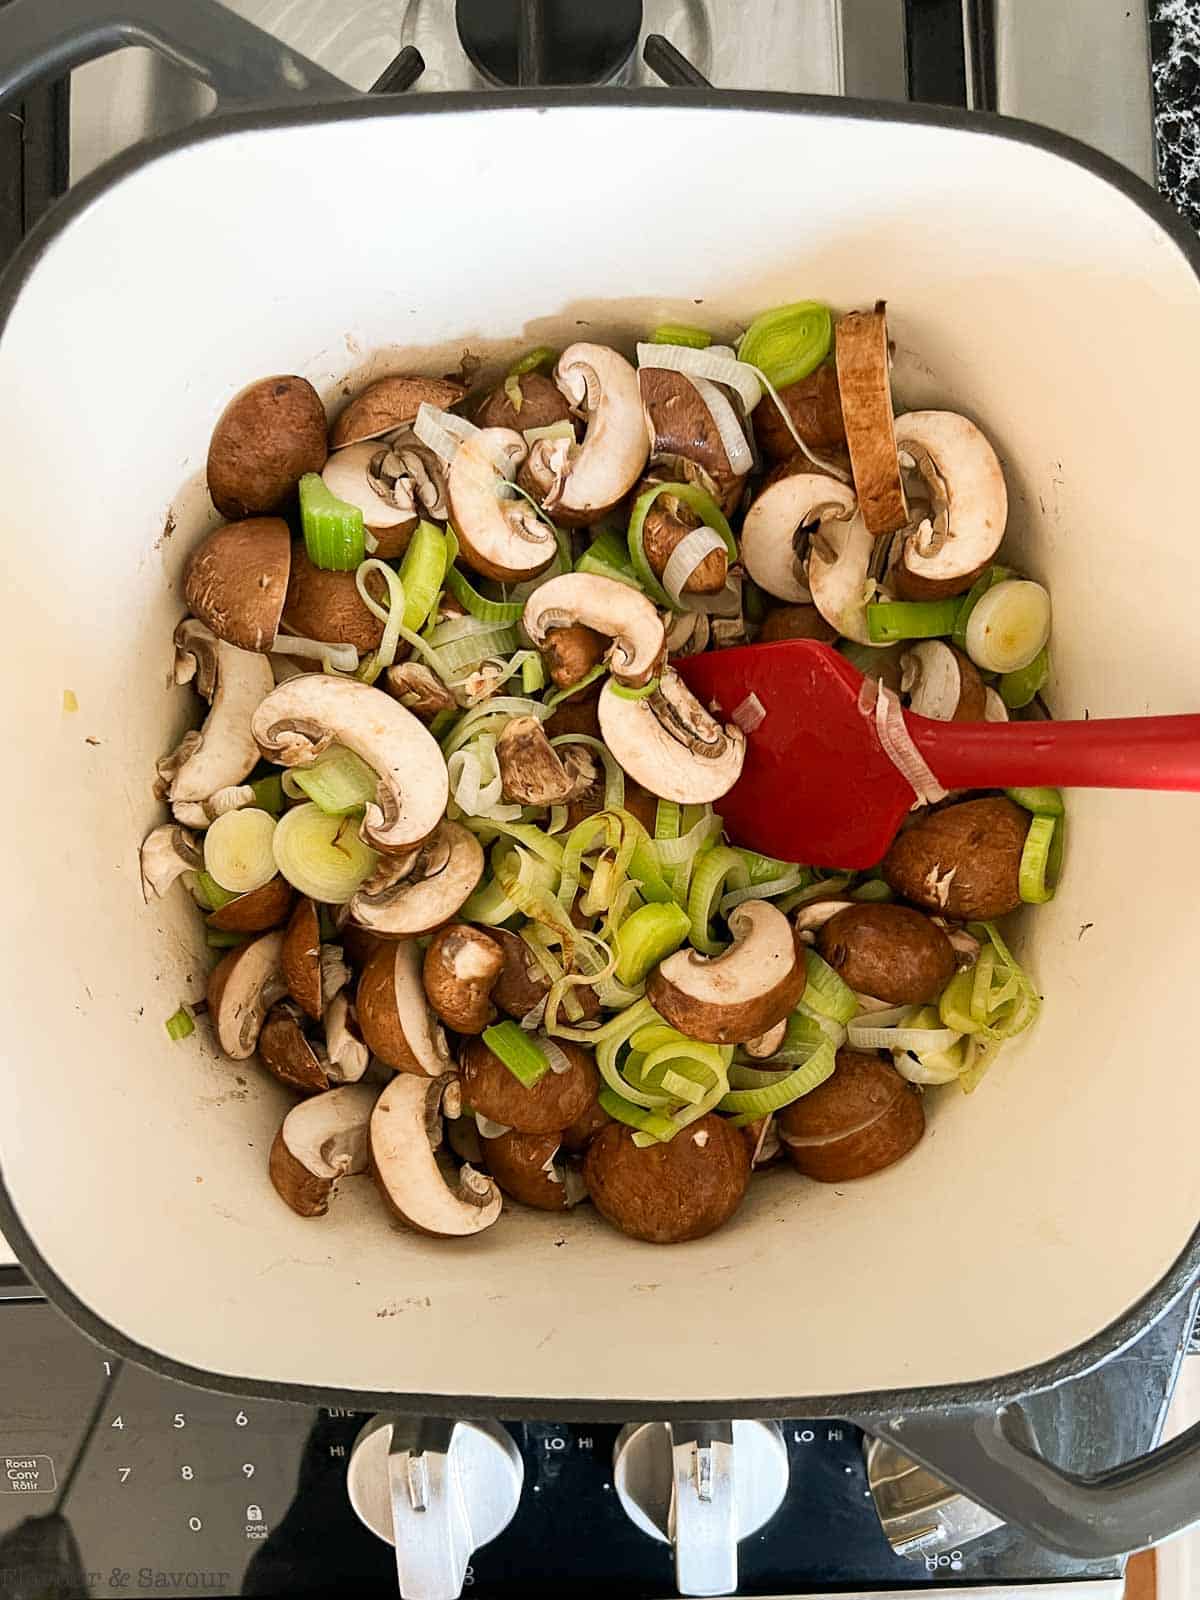 Sautéing mushrooms with leeks and celery.